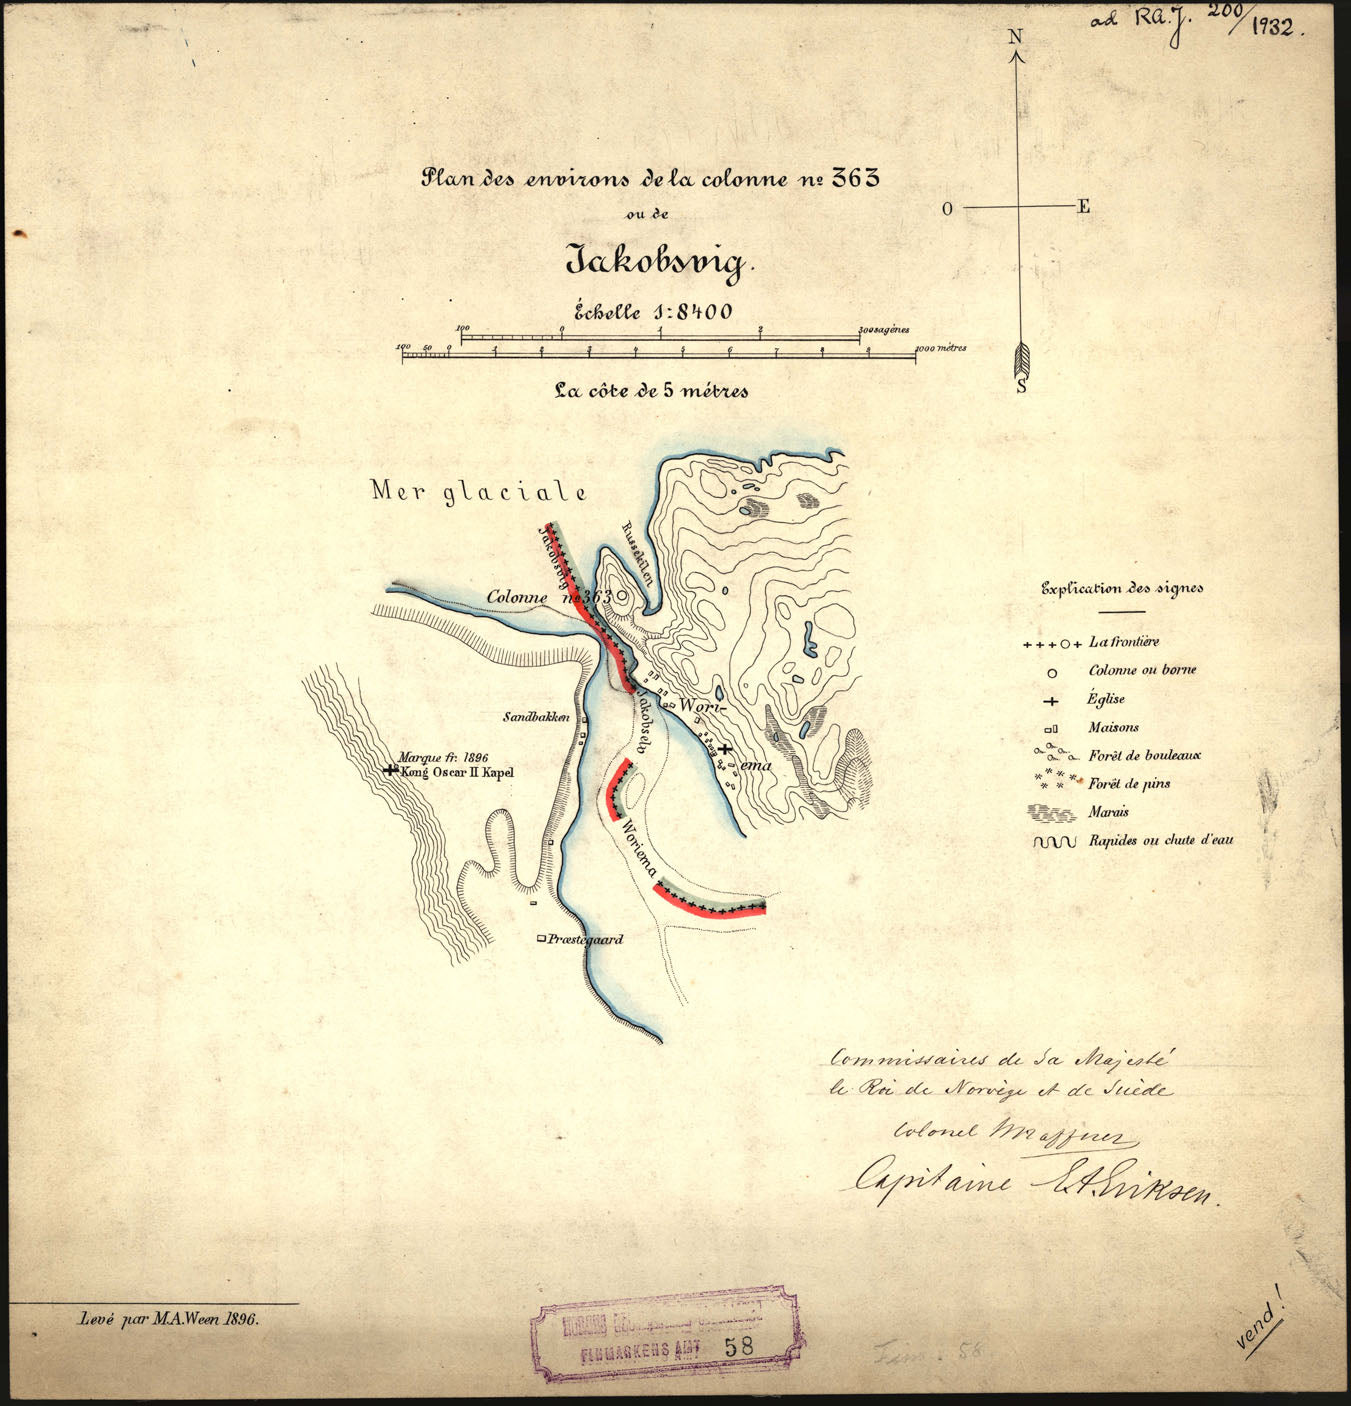 Finmarkens amt nr 58: Plan des environs de la colonne no 363 ou de Jakobsvig: Finnmark